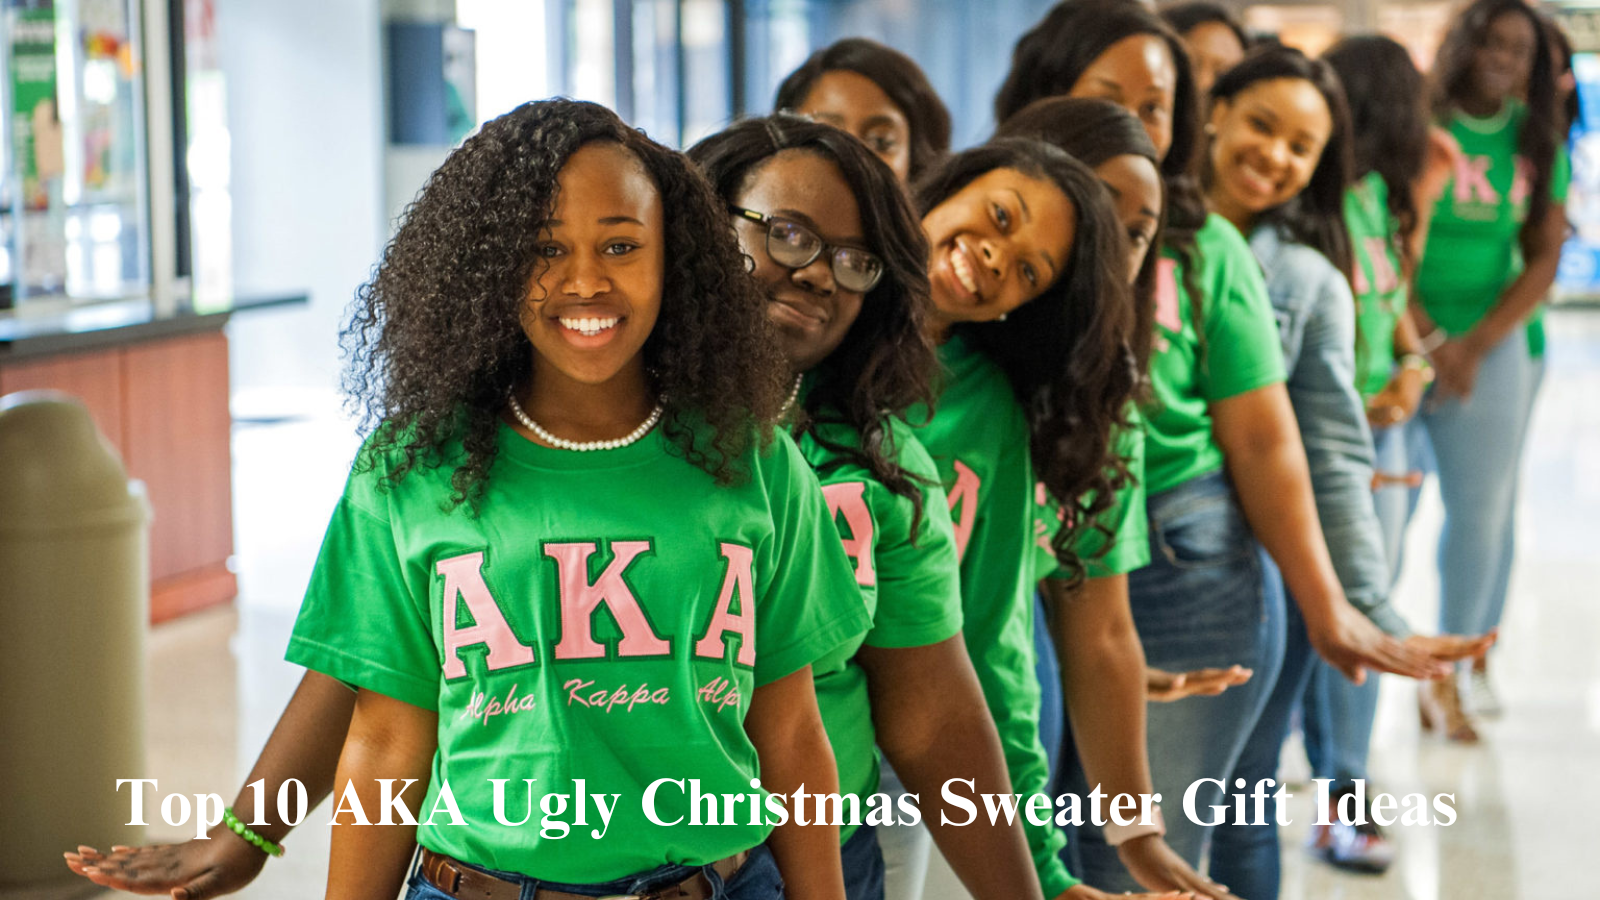 Top 10 AKA Ugly Christmas Sweater Gift Ideas